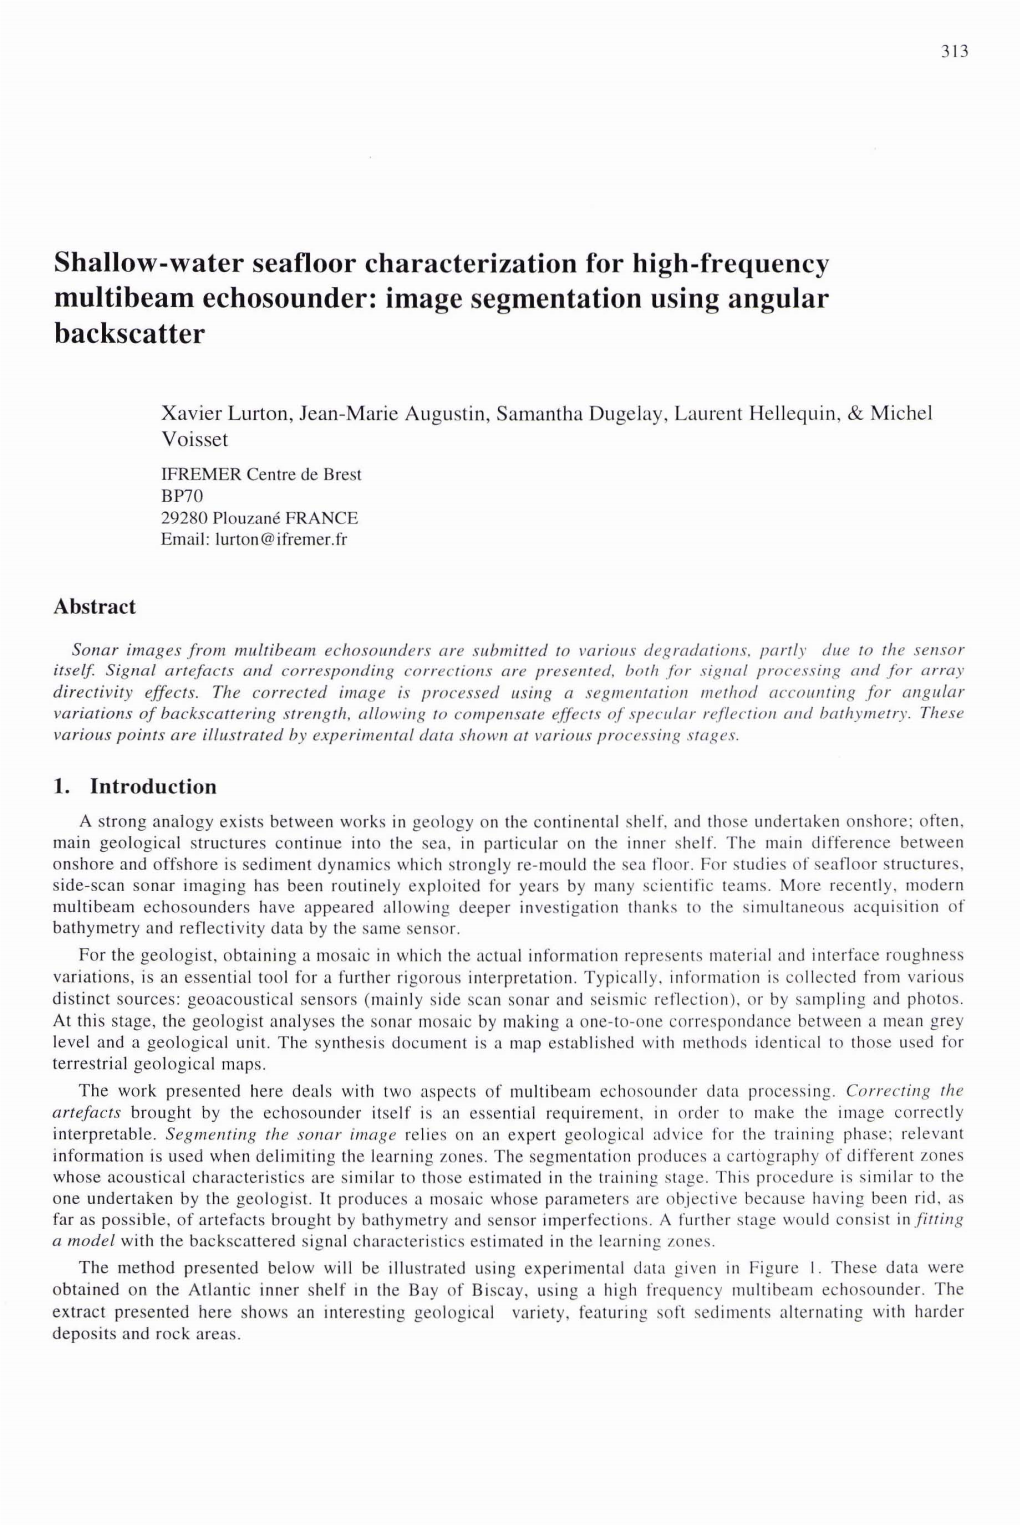 Shallow-Water Seafloor Characterization for High-Frequency Multibeam Echosounder: Image Segmentation Using Angular Backscatter